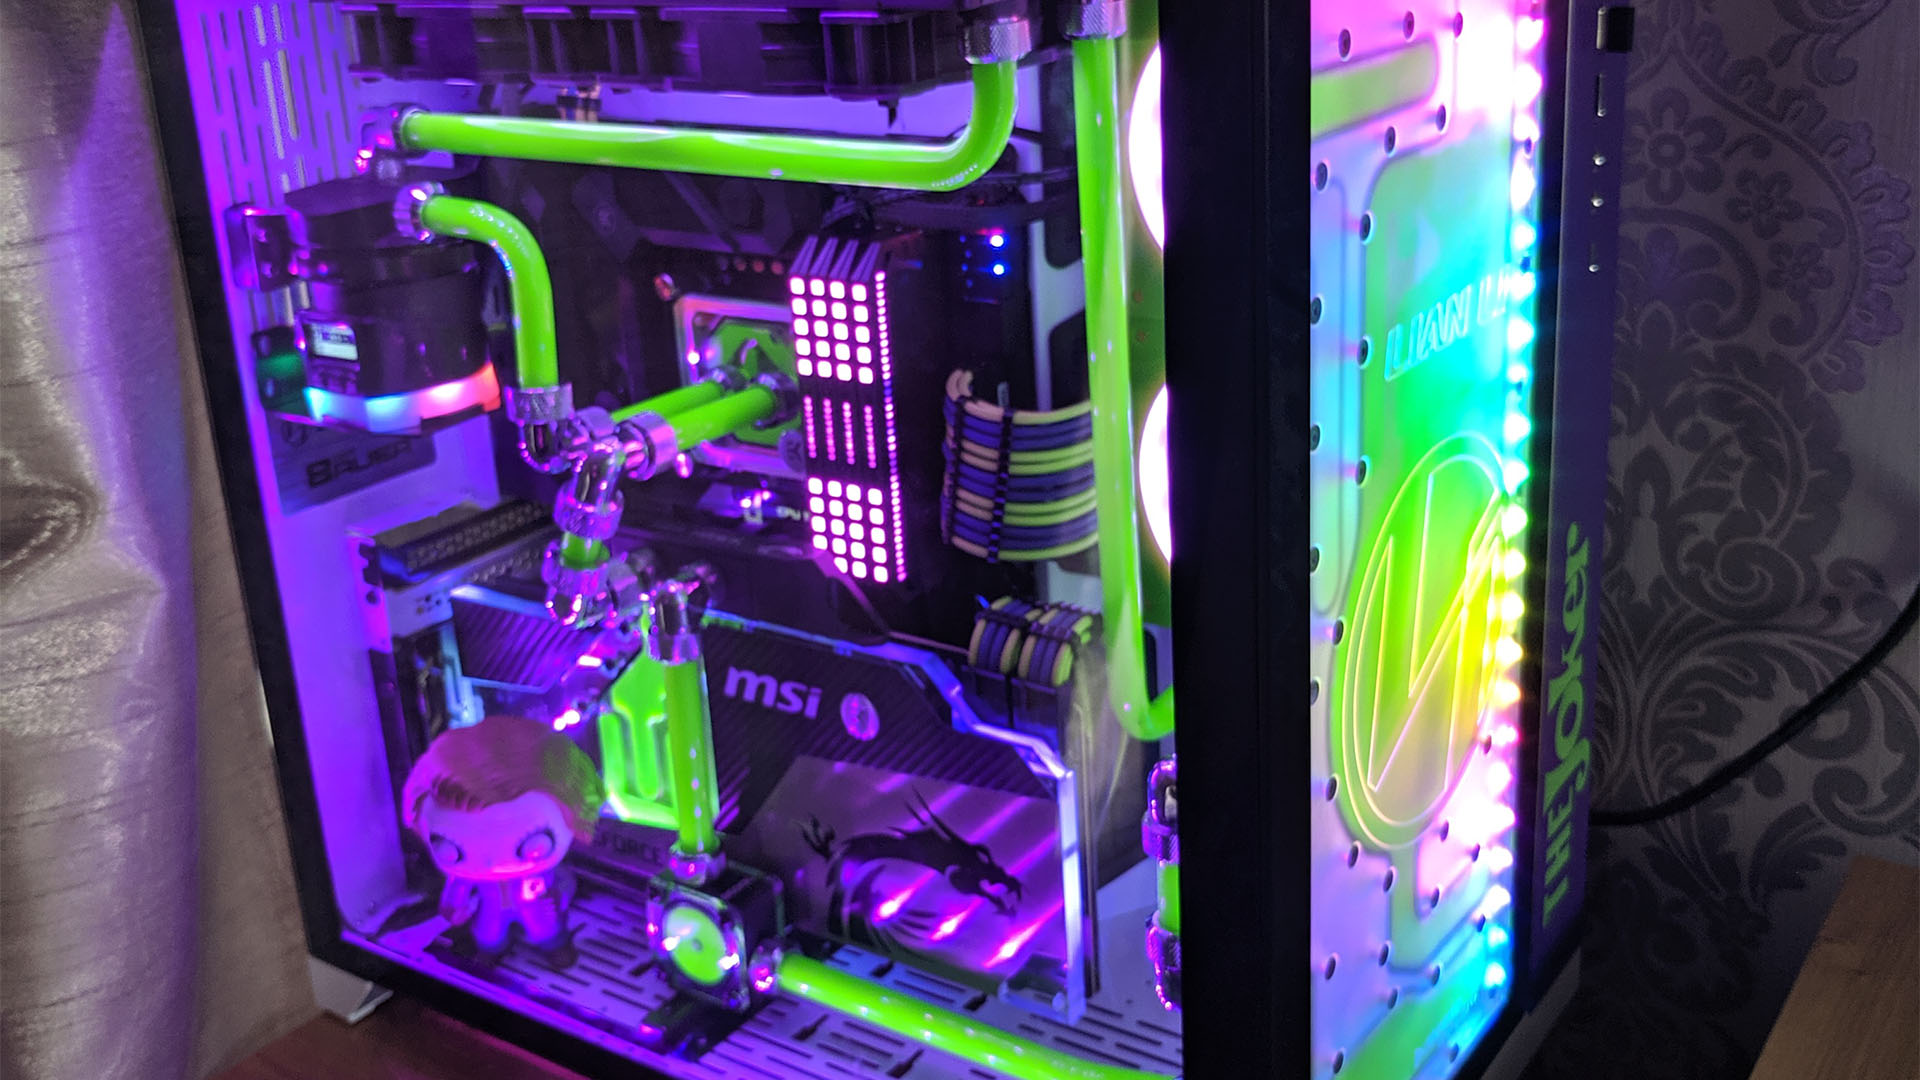 The Joker PC with green hardline tubing and purple RGB lighting